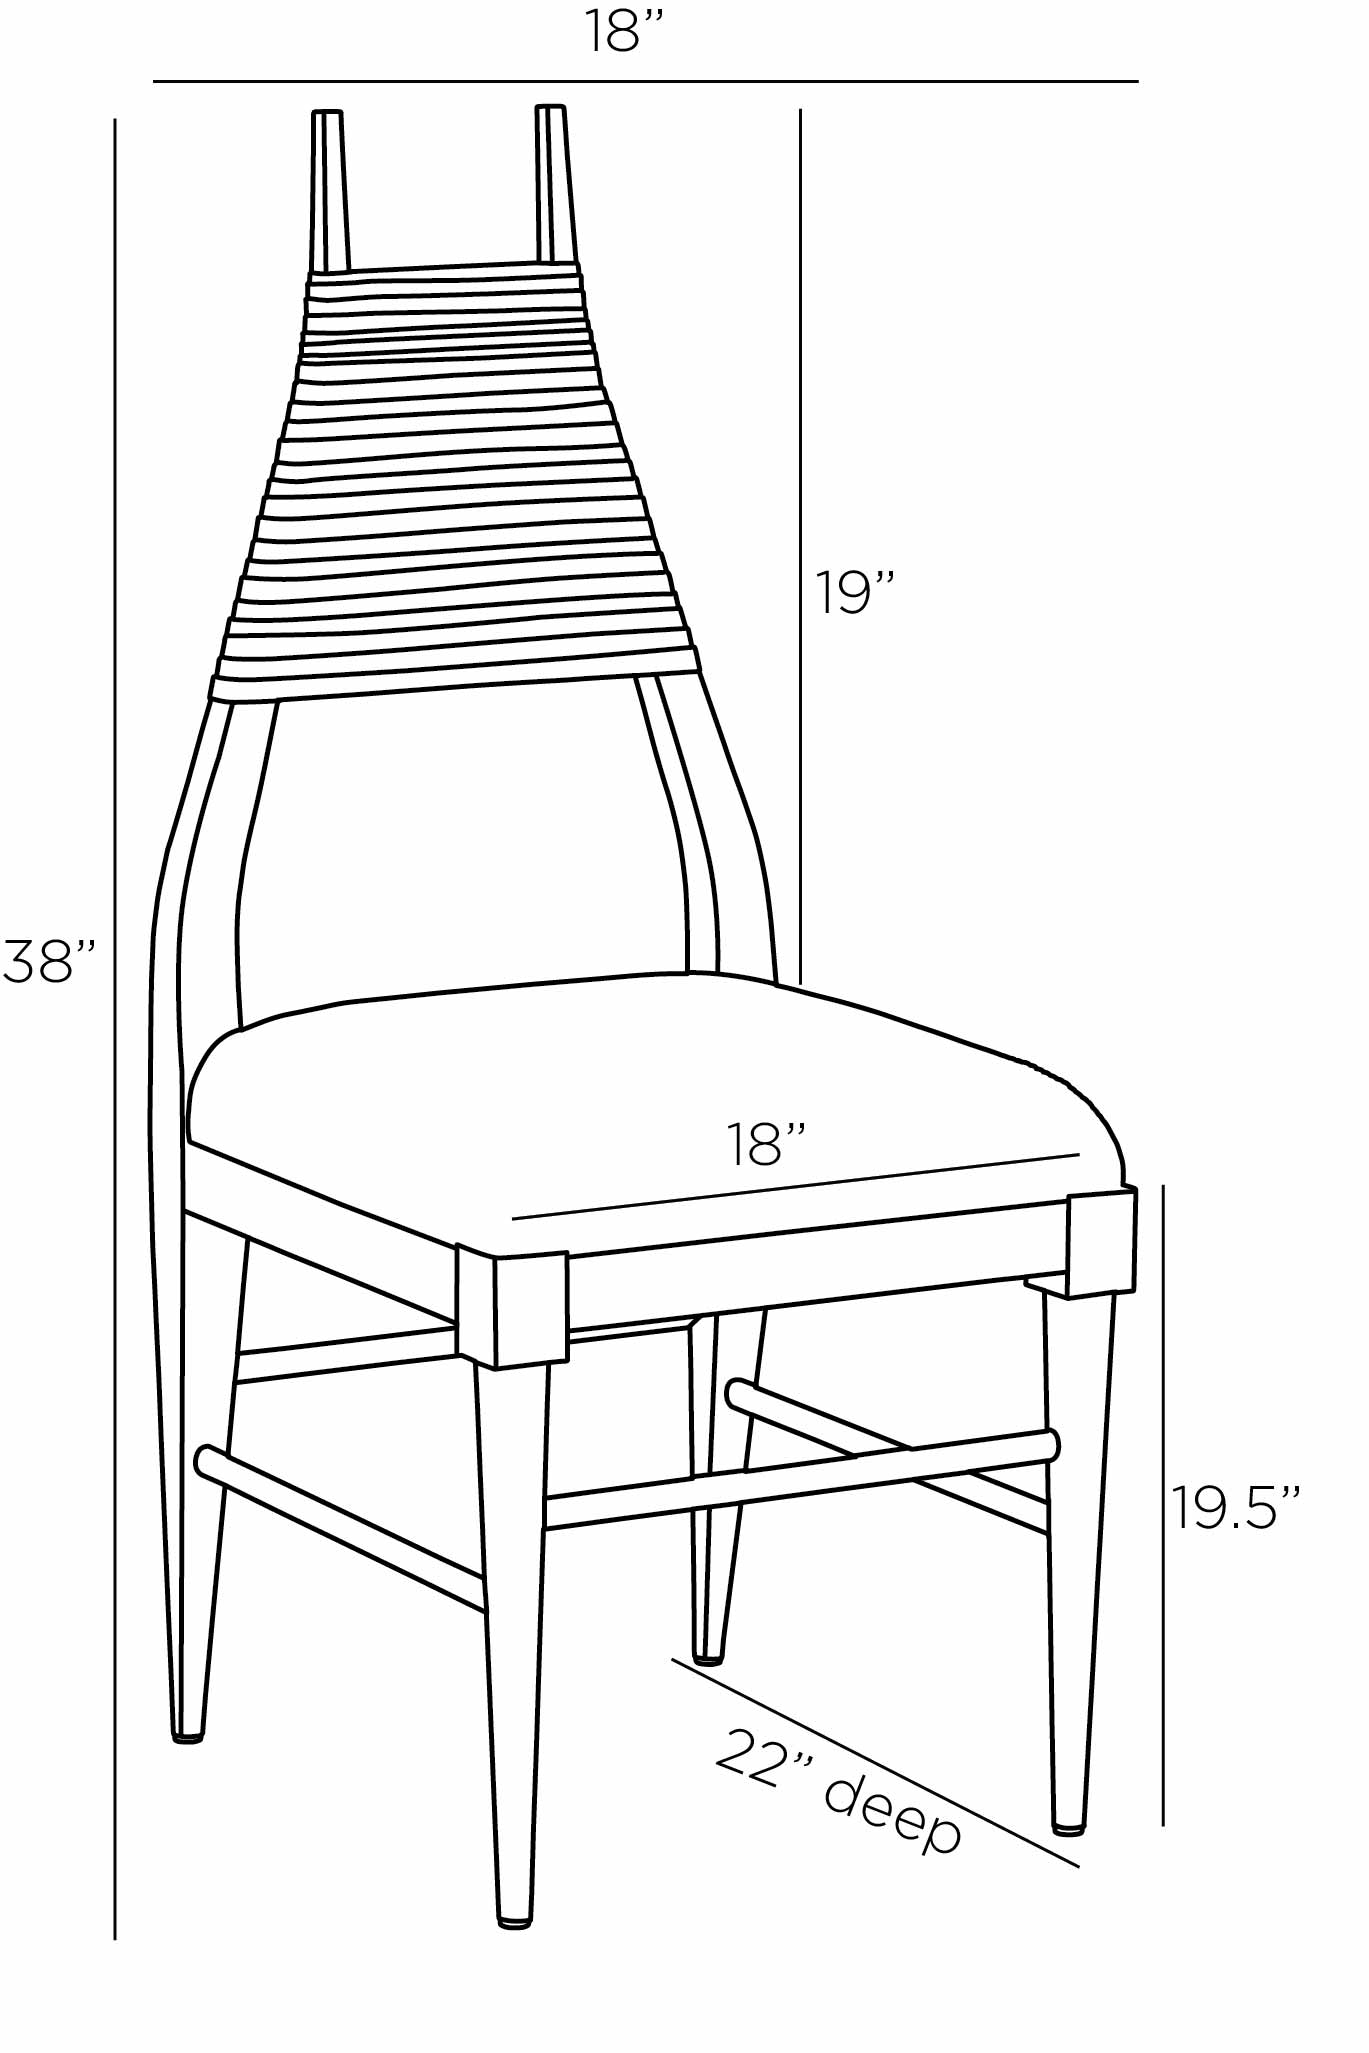 Biziki Dining Chair - Morel Leather